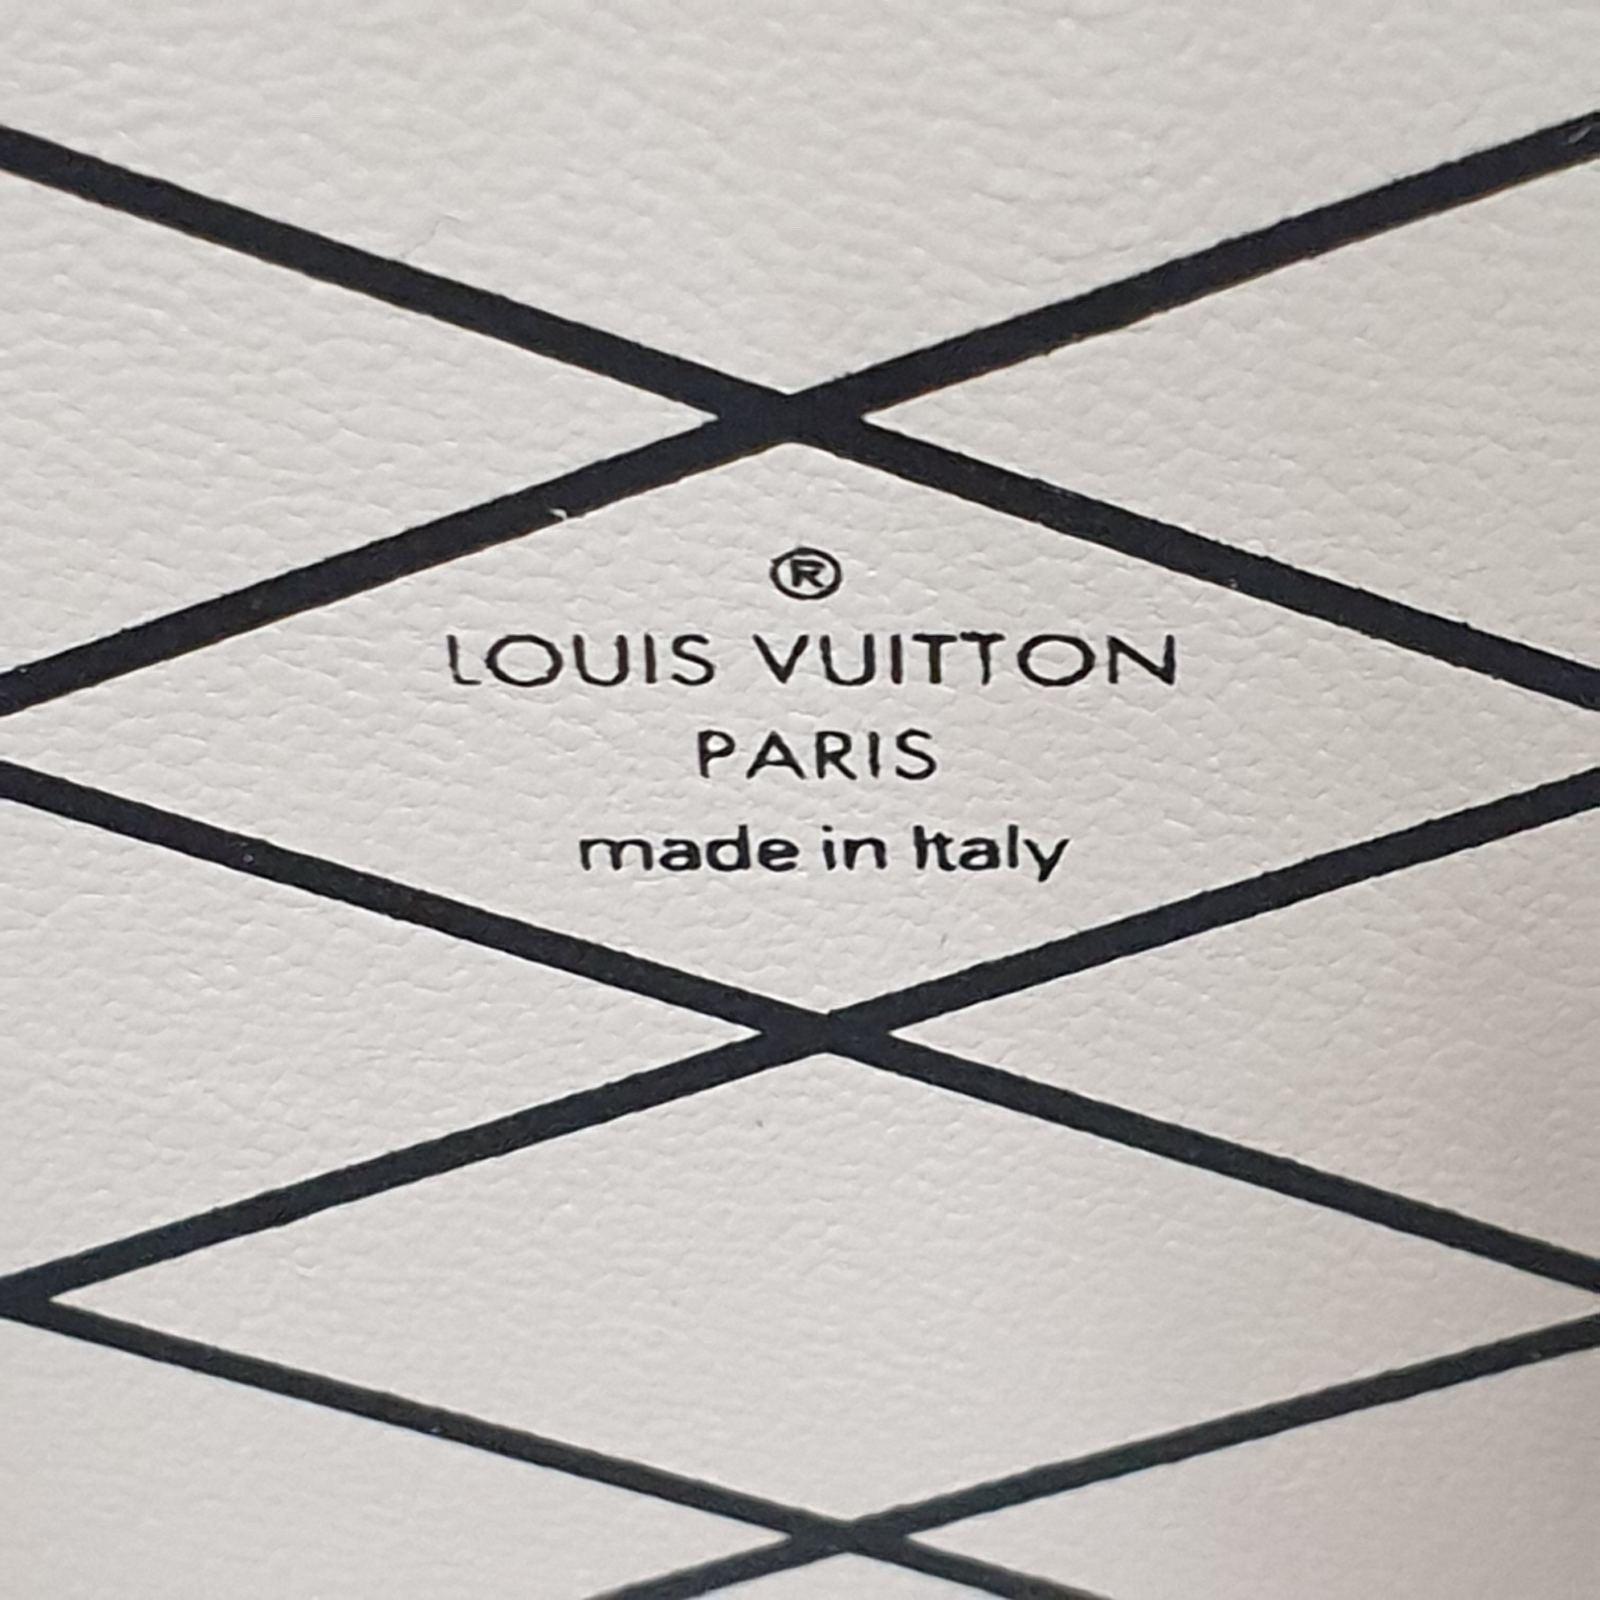 NWOB Louis Vuitton FW 2018 Trunk Petite Malle Bag 3